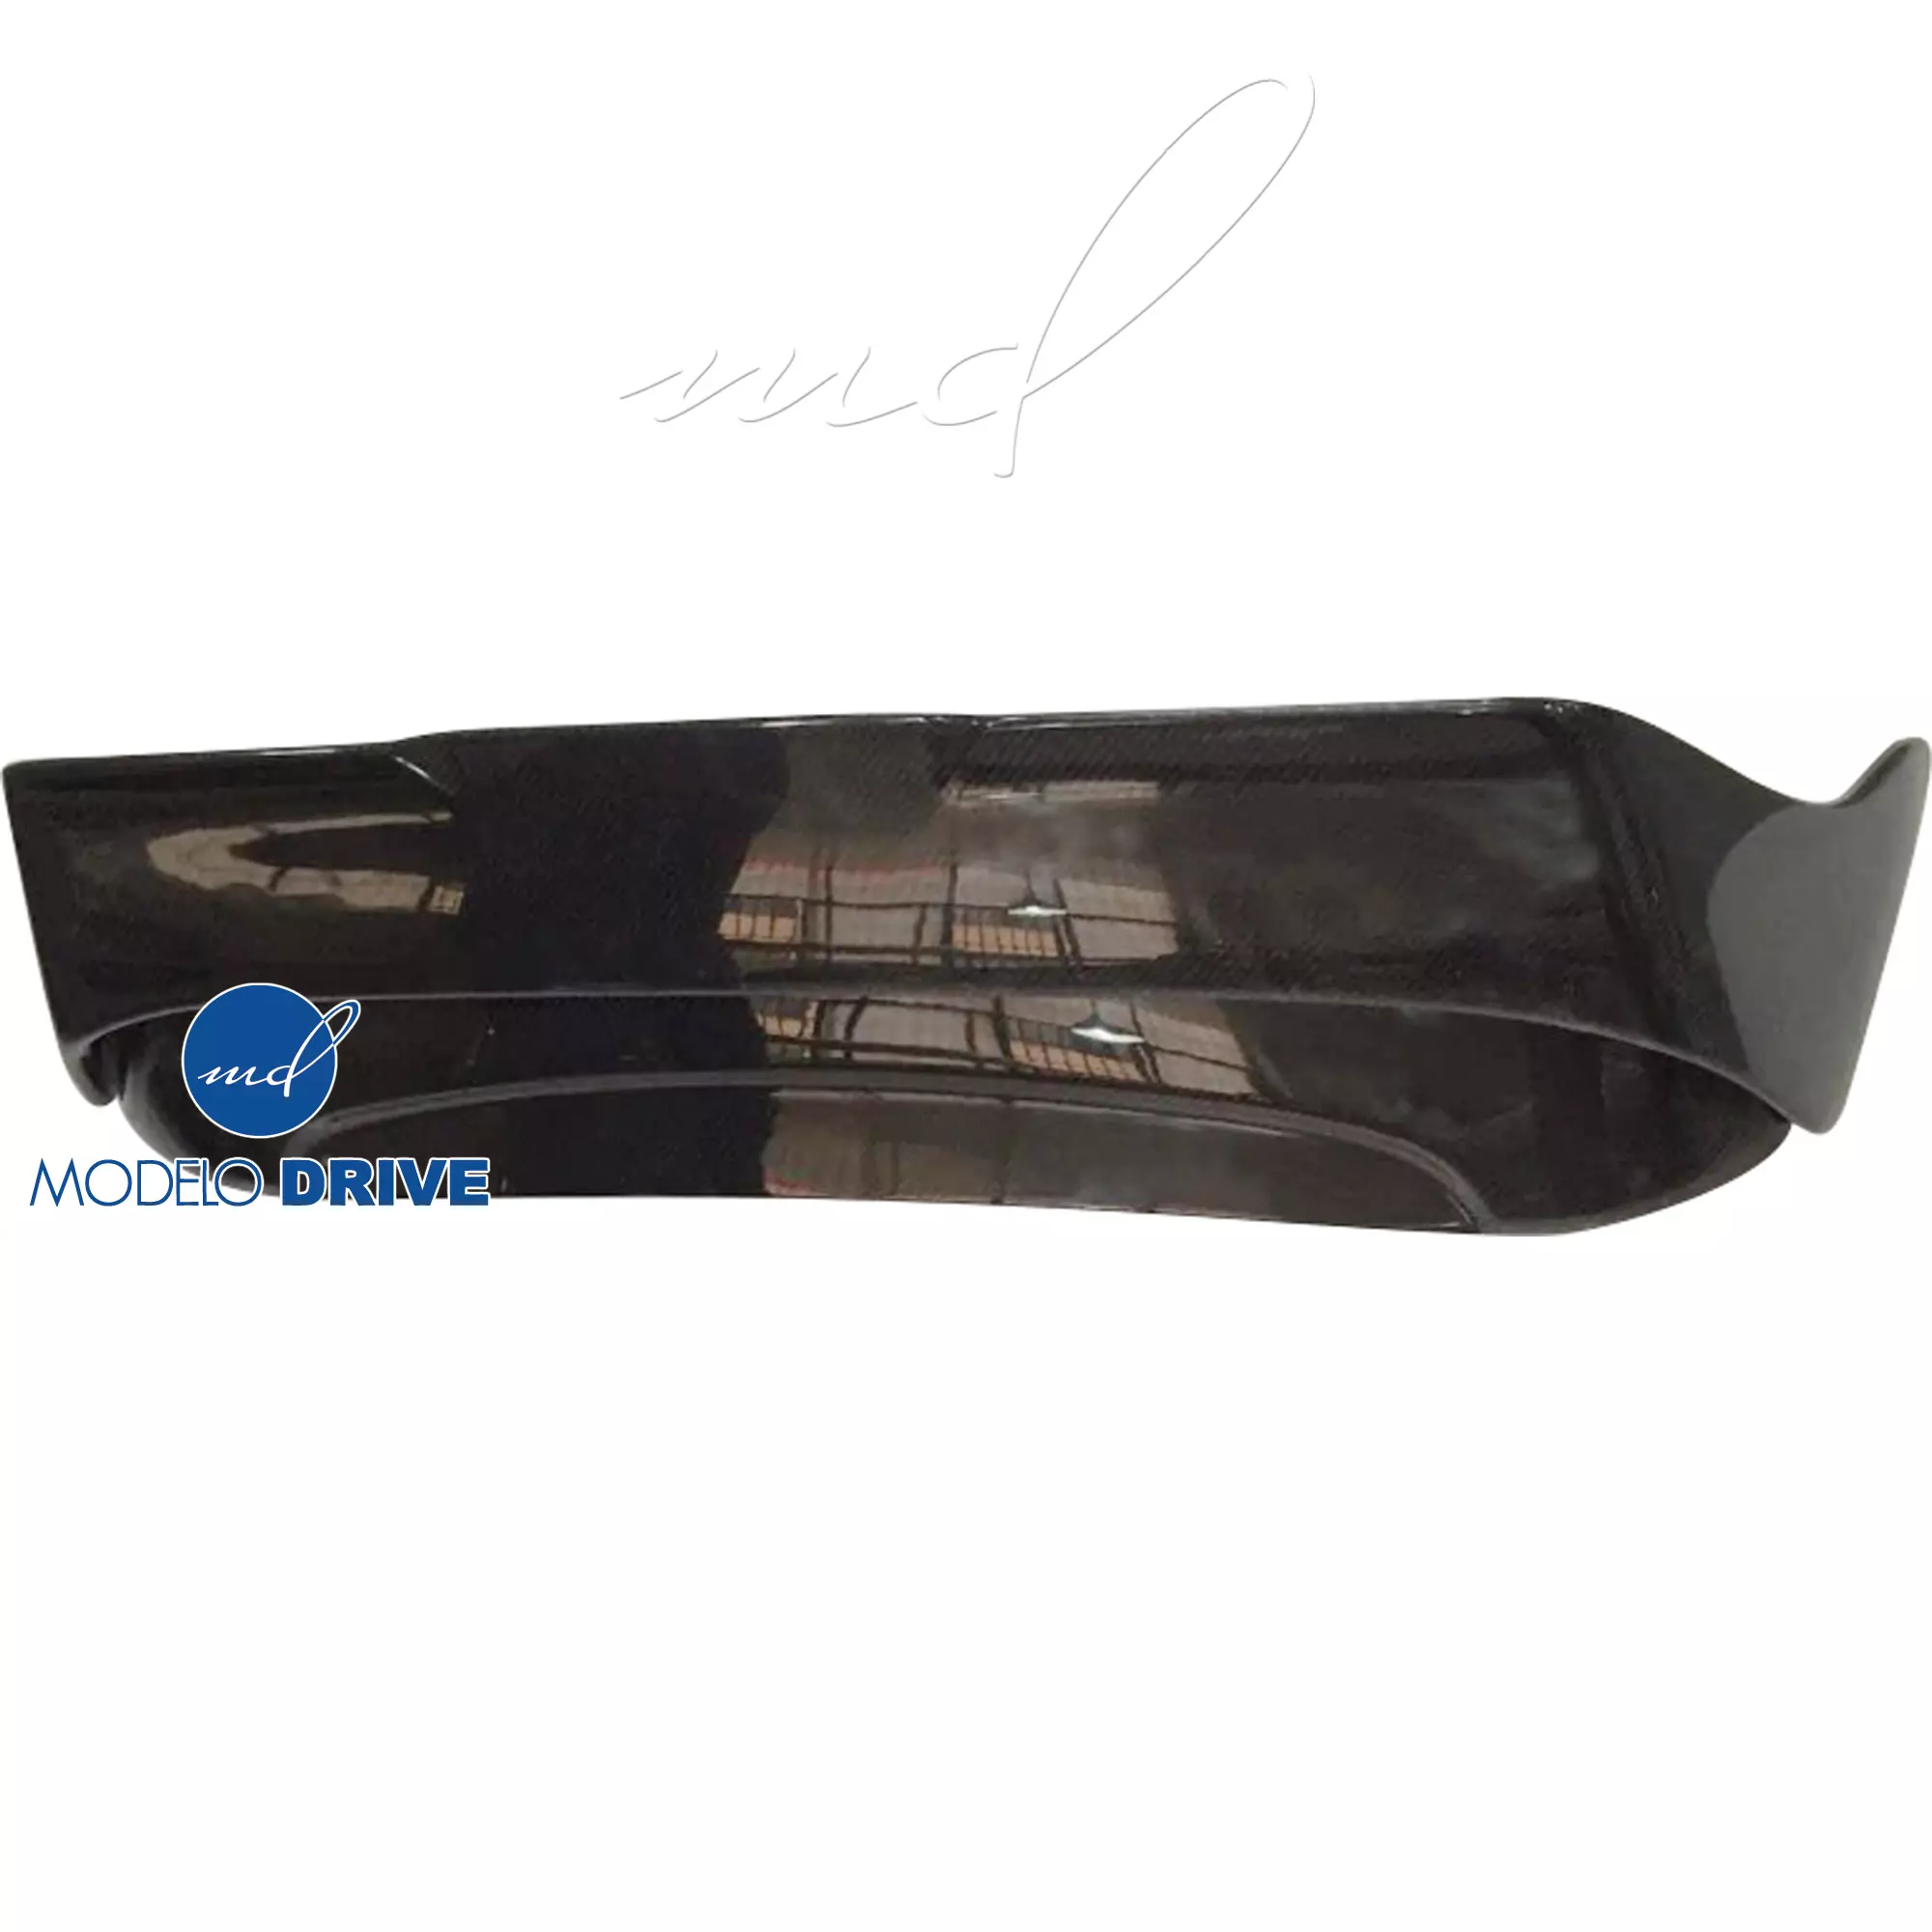 ModeloDrive Carbon Fiber DUAG Roof Spoiler Wing > Mini Mini Cooper F56 F57 2014-2020 - Image 6